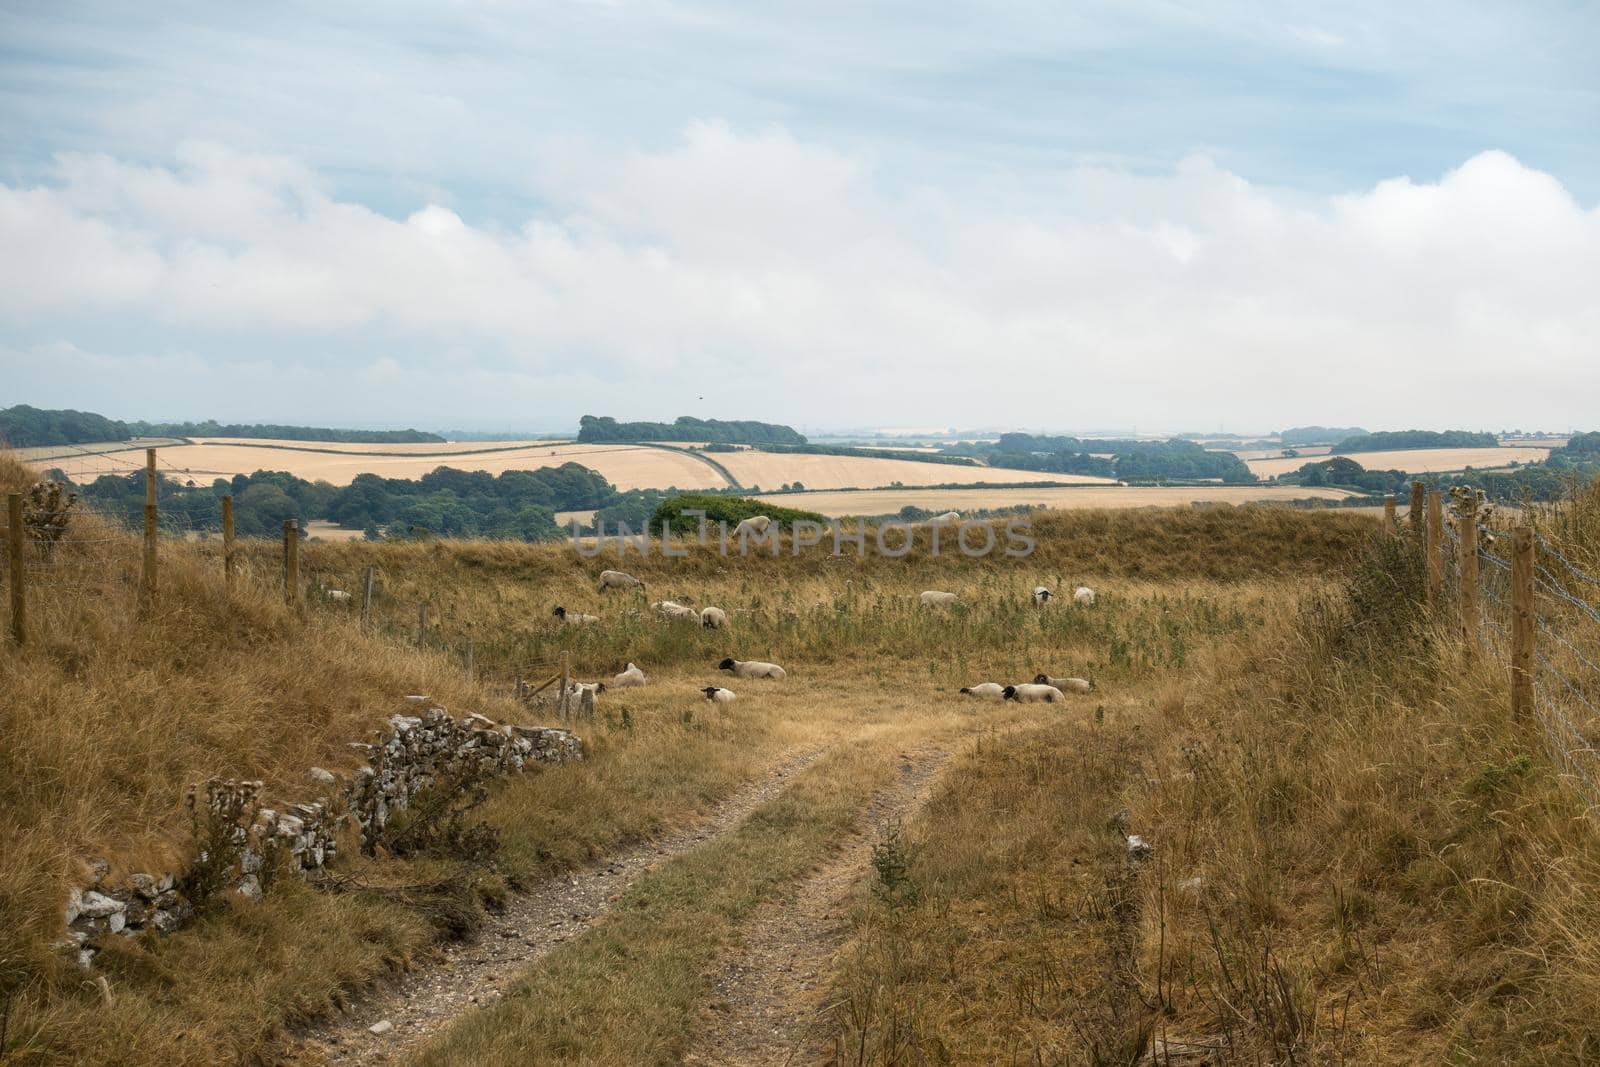 Sheep grazing in the English landscape at Maiden Castle near Dorchester Dorset Great Britain in the summer by LeoniekvanderVliet